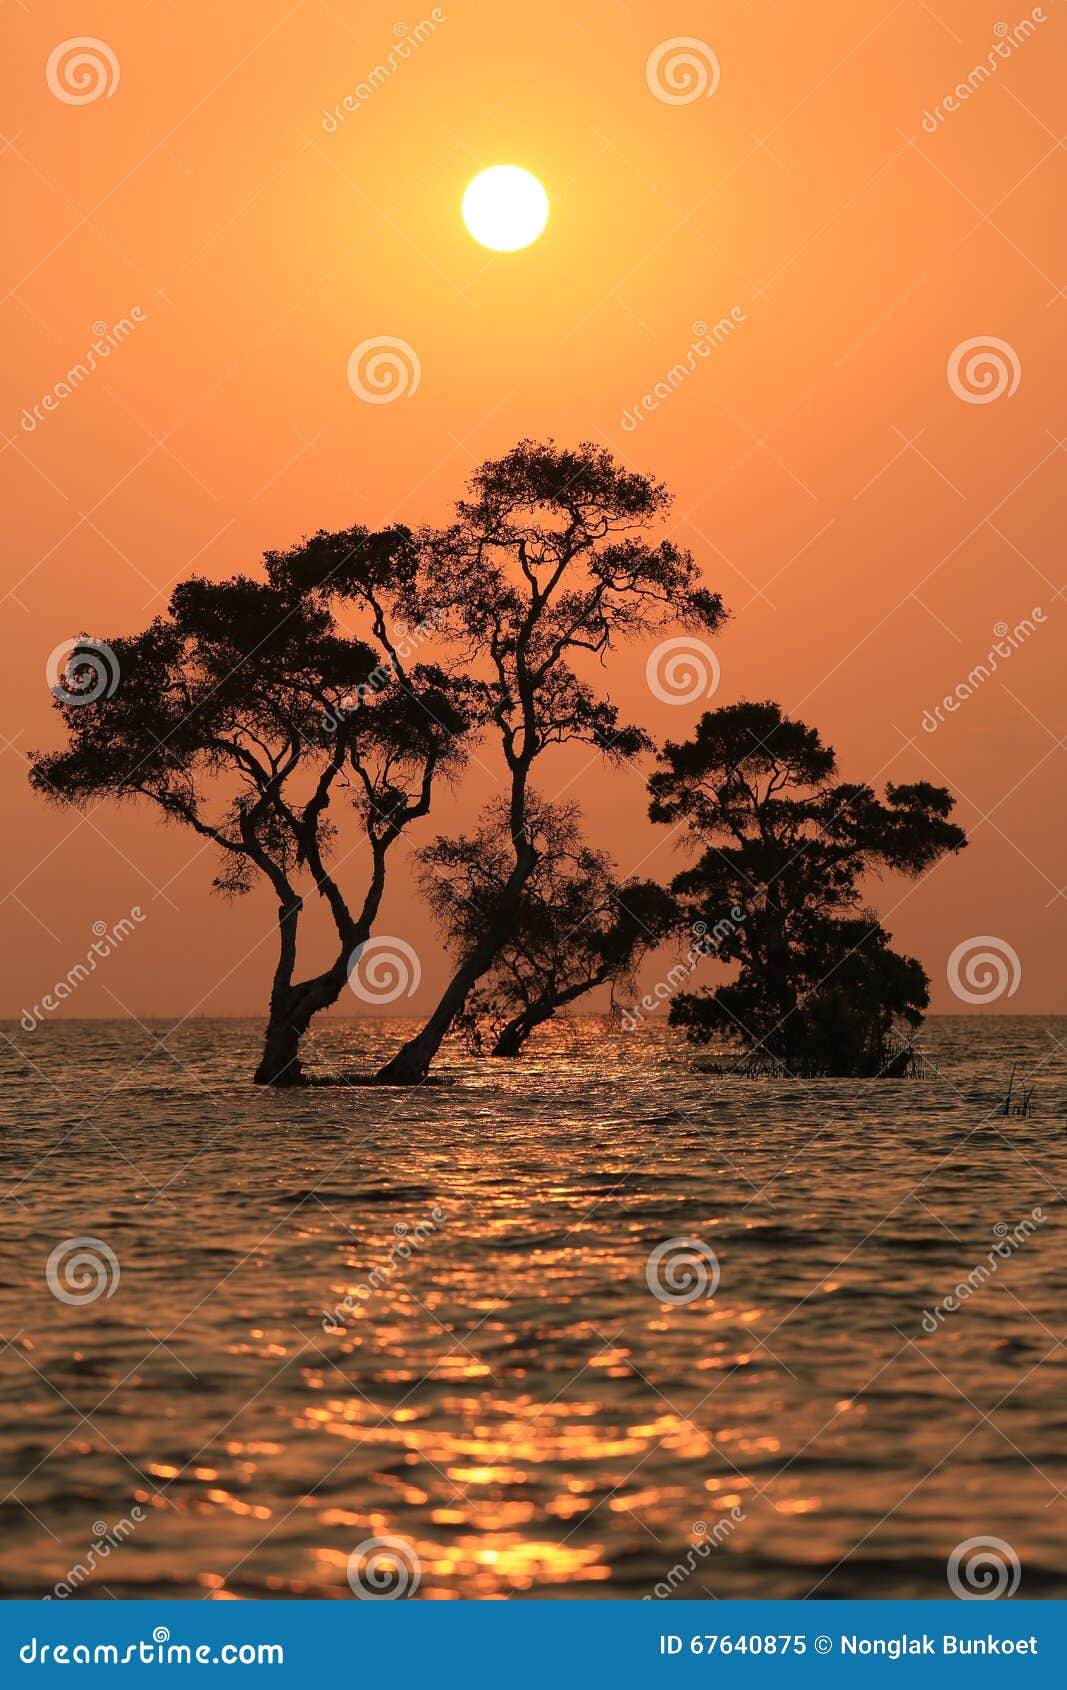 Sunrise and Tree Silhouette Stock Image - Image of bush, bulrush: 67640875